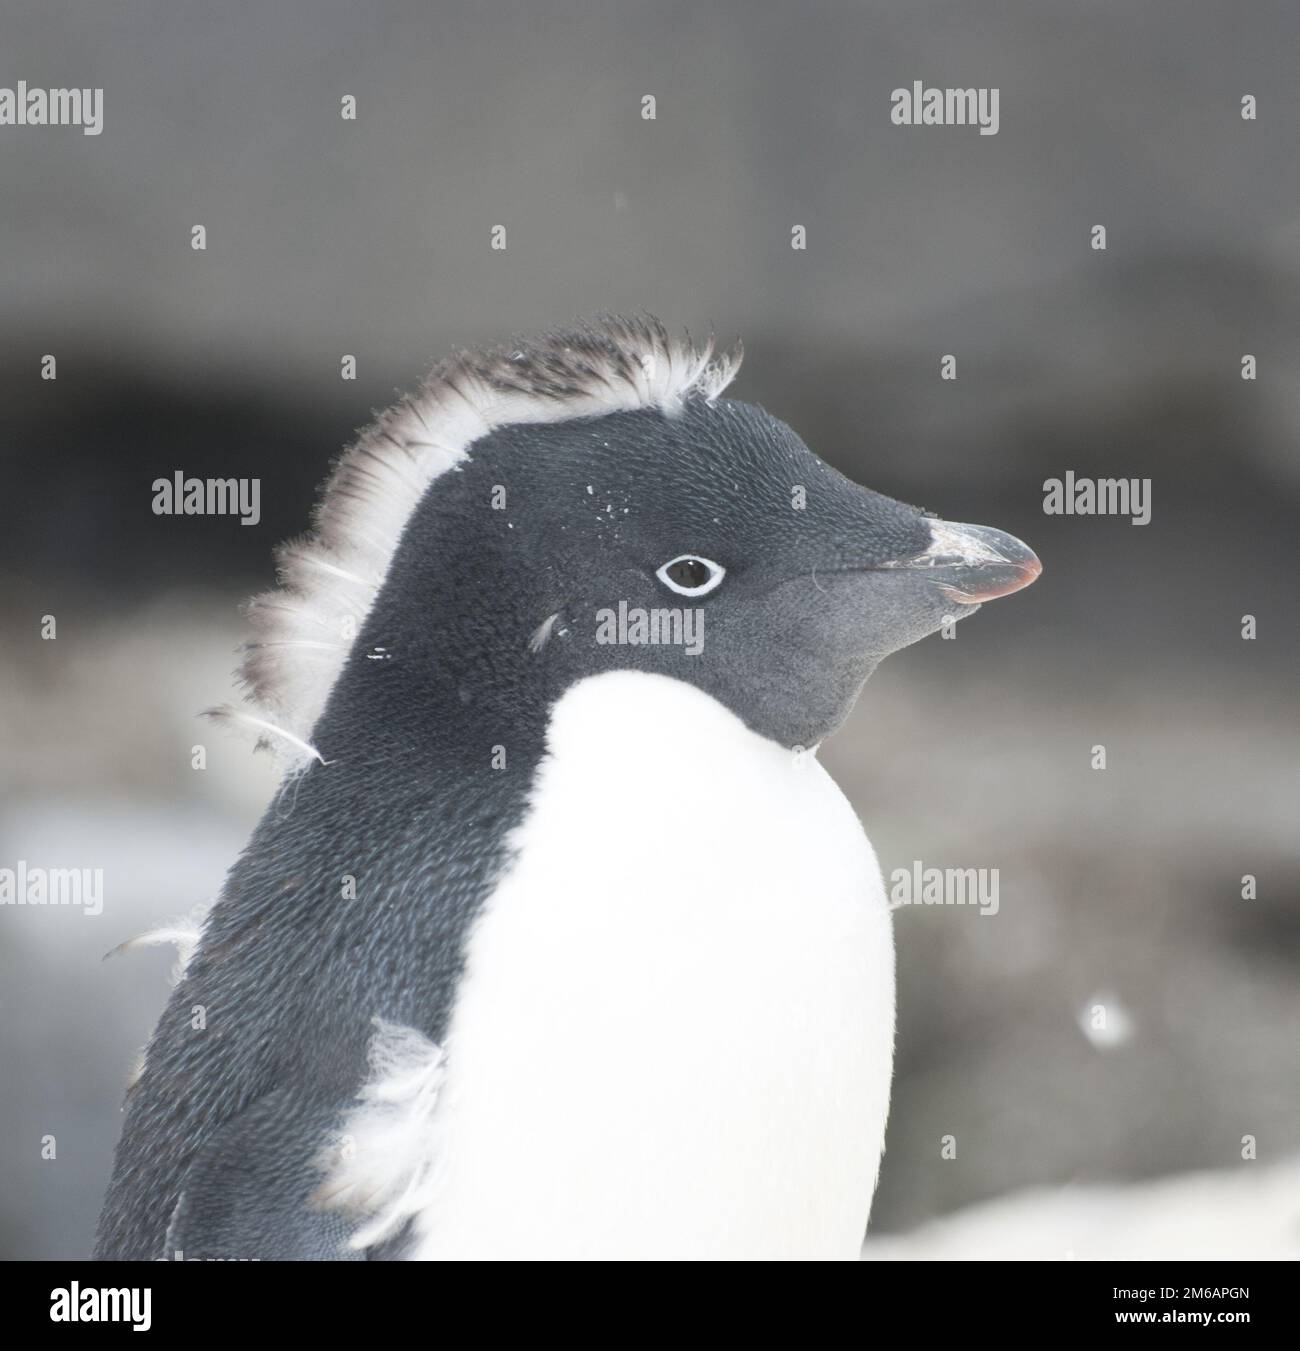 Adelie Penguin - mohawk (iroquois). Stock Photo